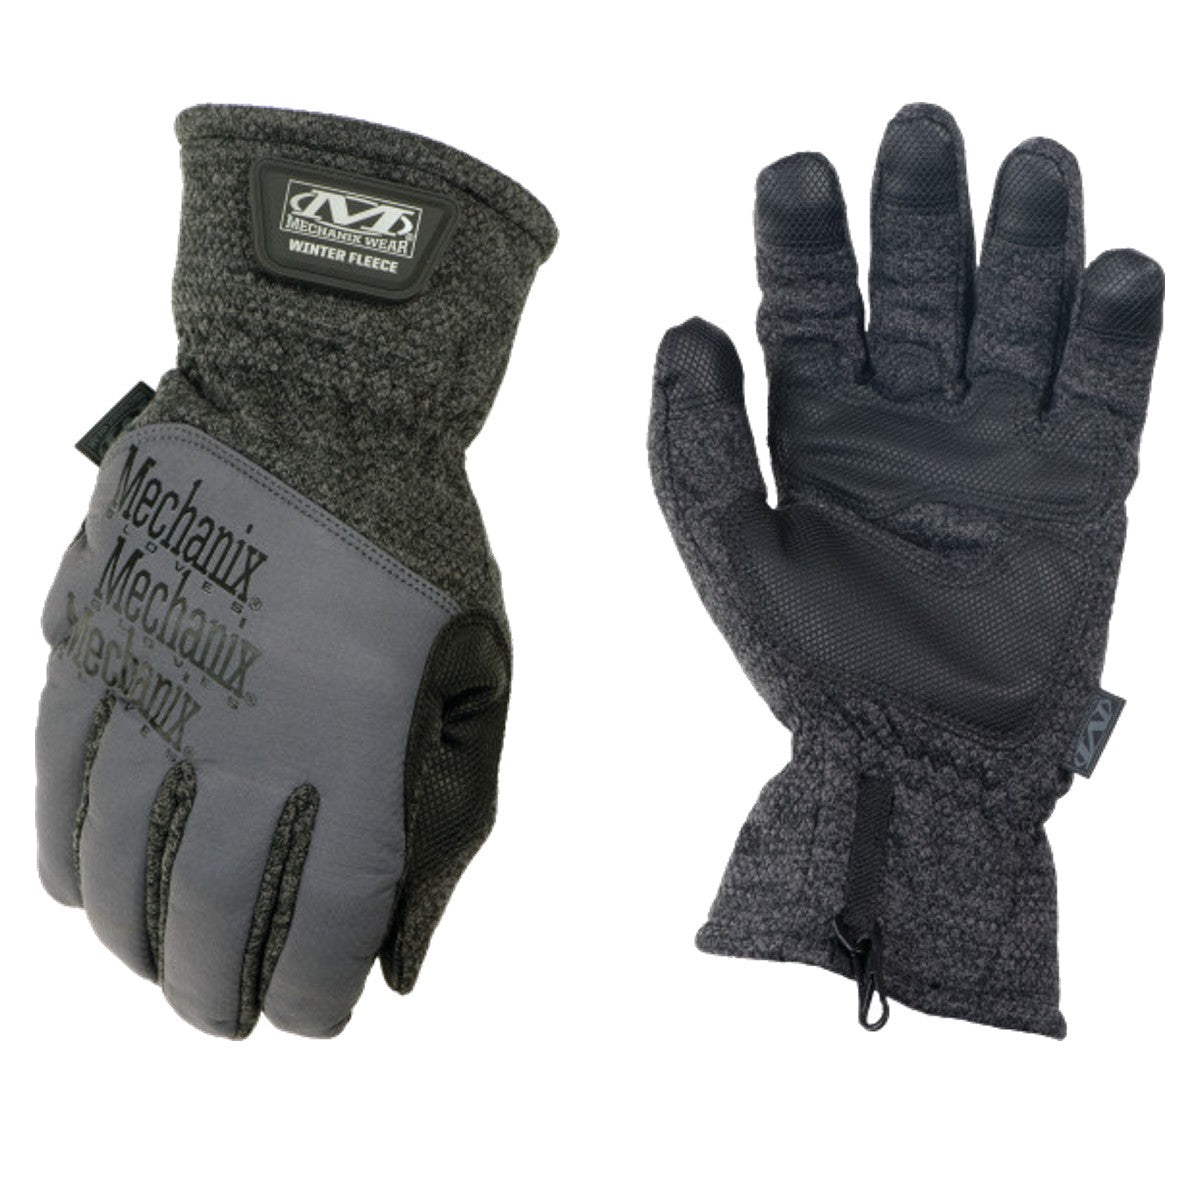 Mechanixwear Insulated Winter Utility Fleece Glove